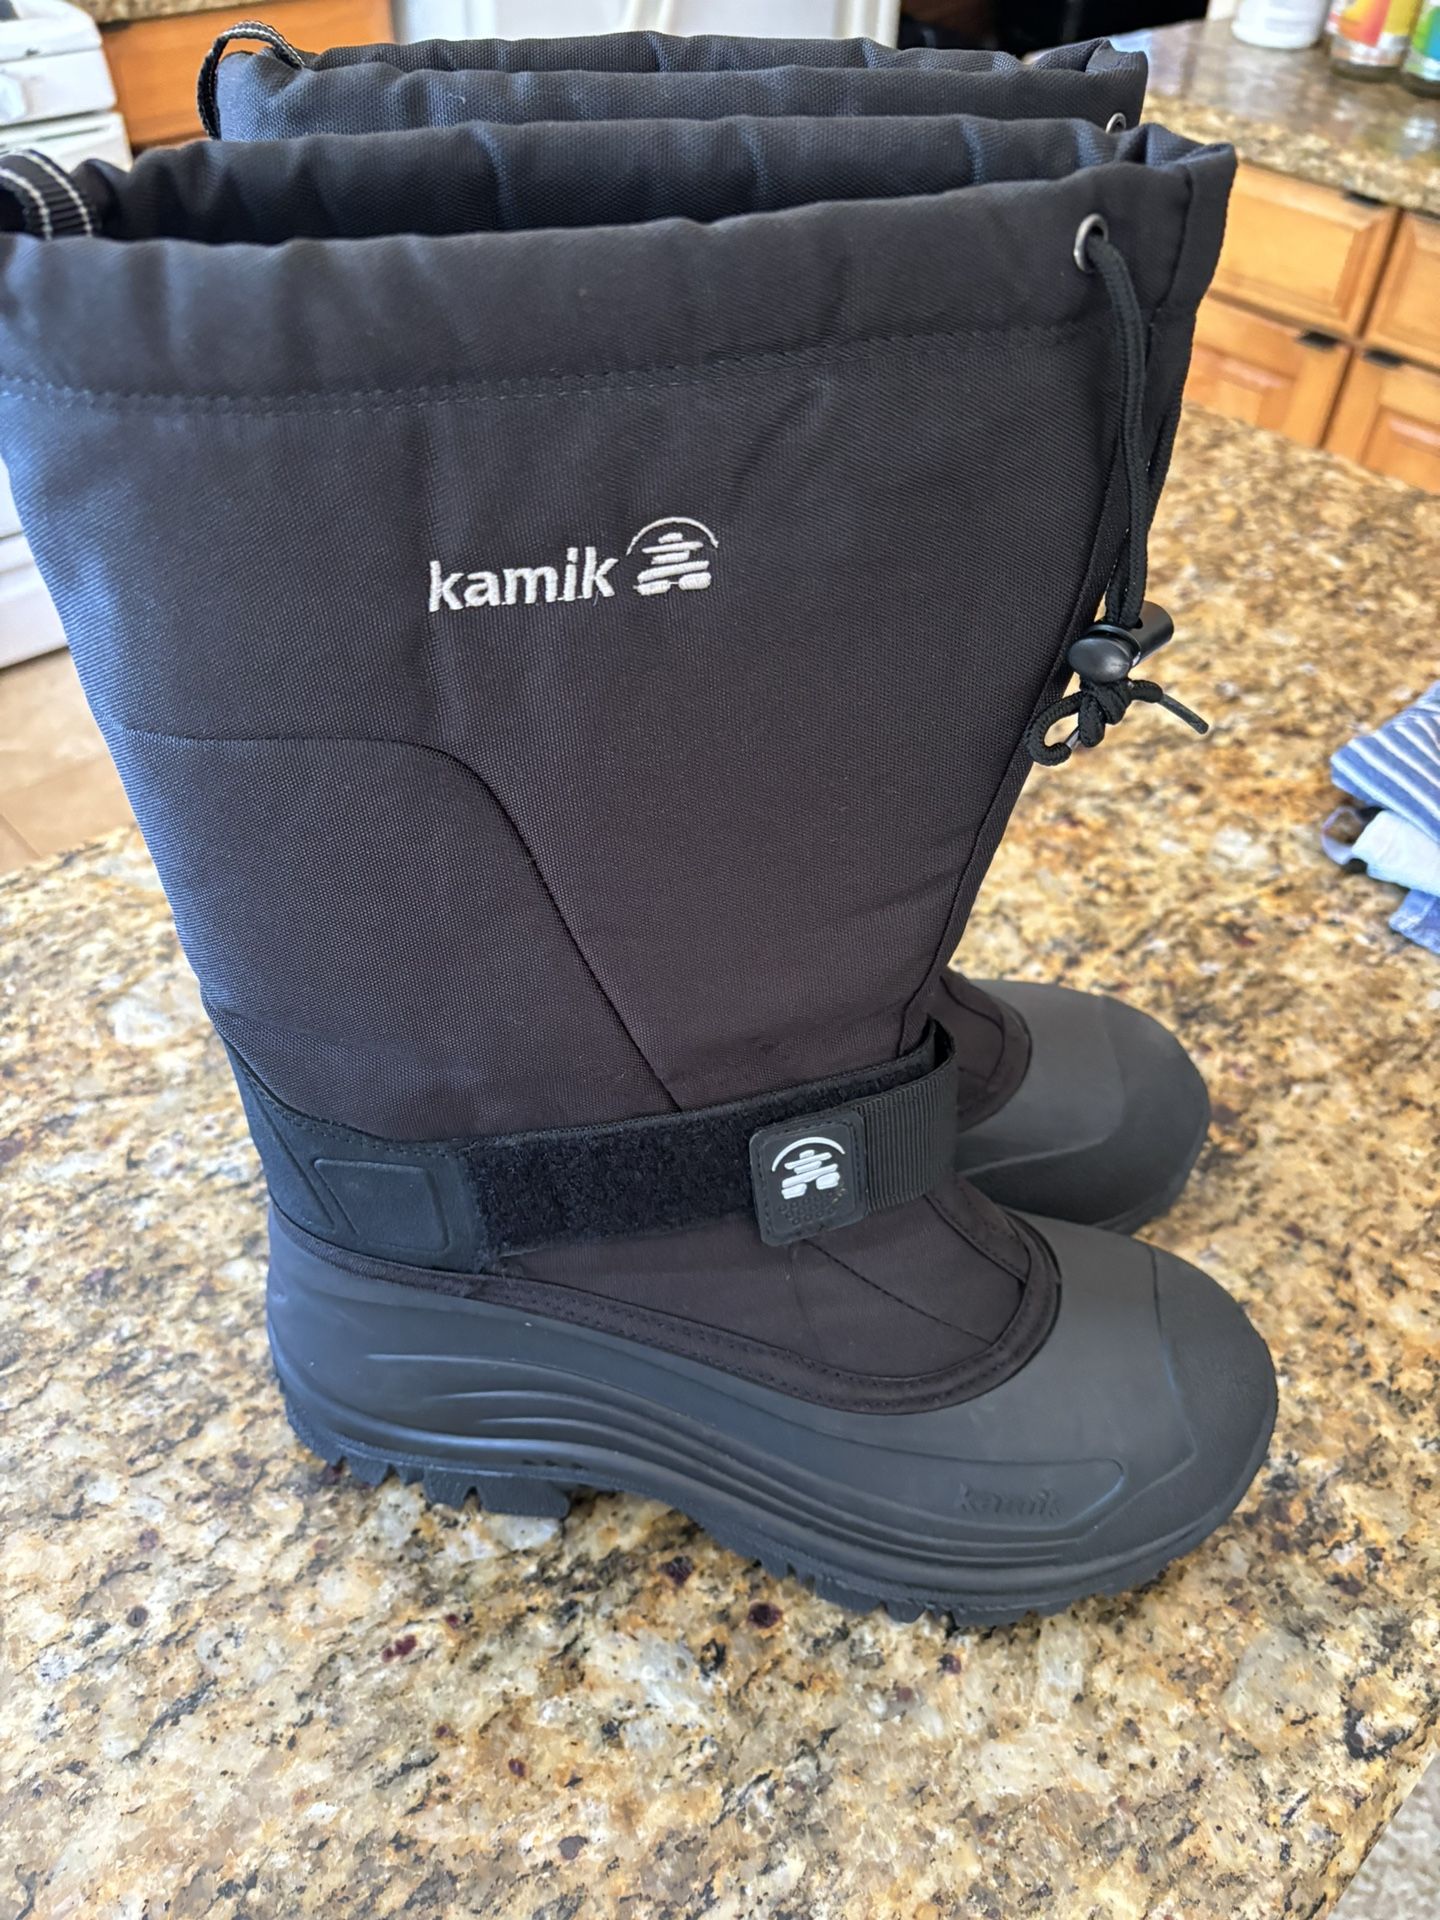 Snow boots- Kamik. Size 11